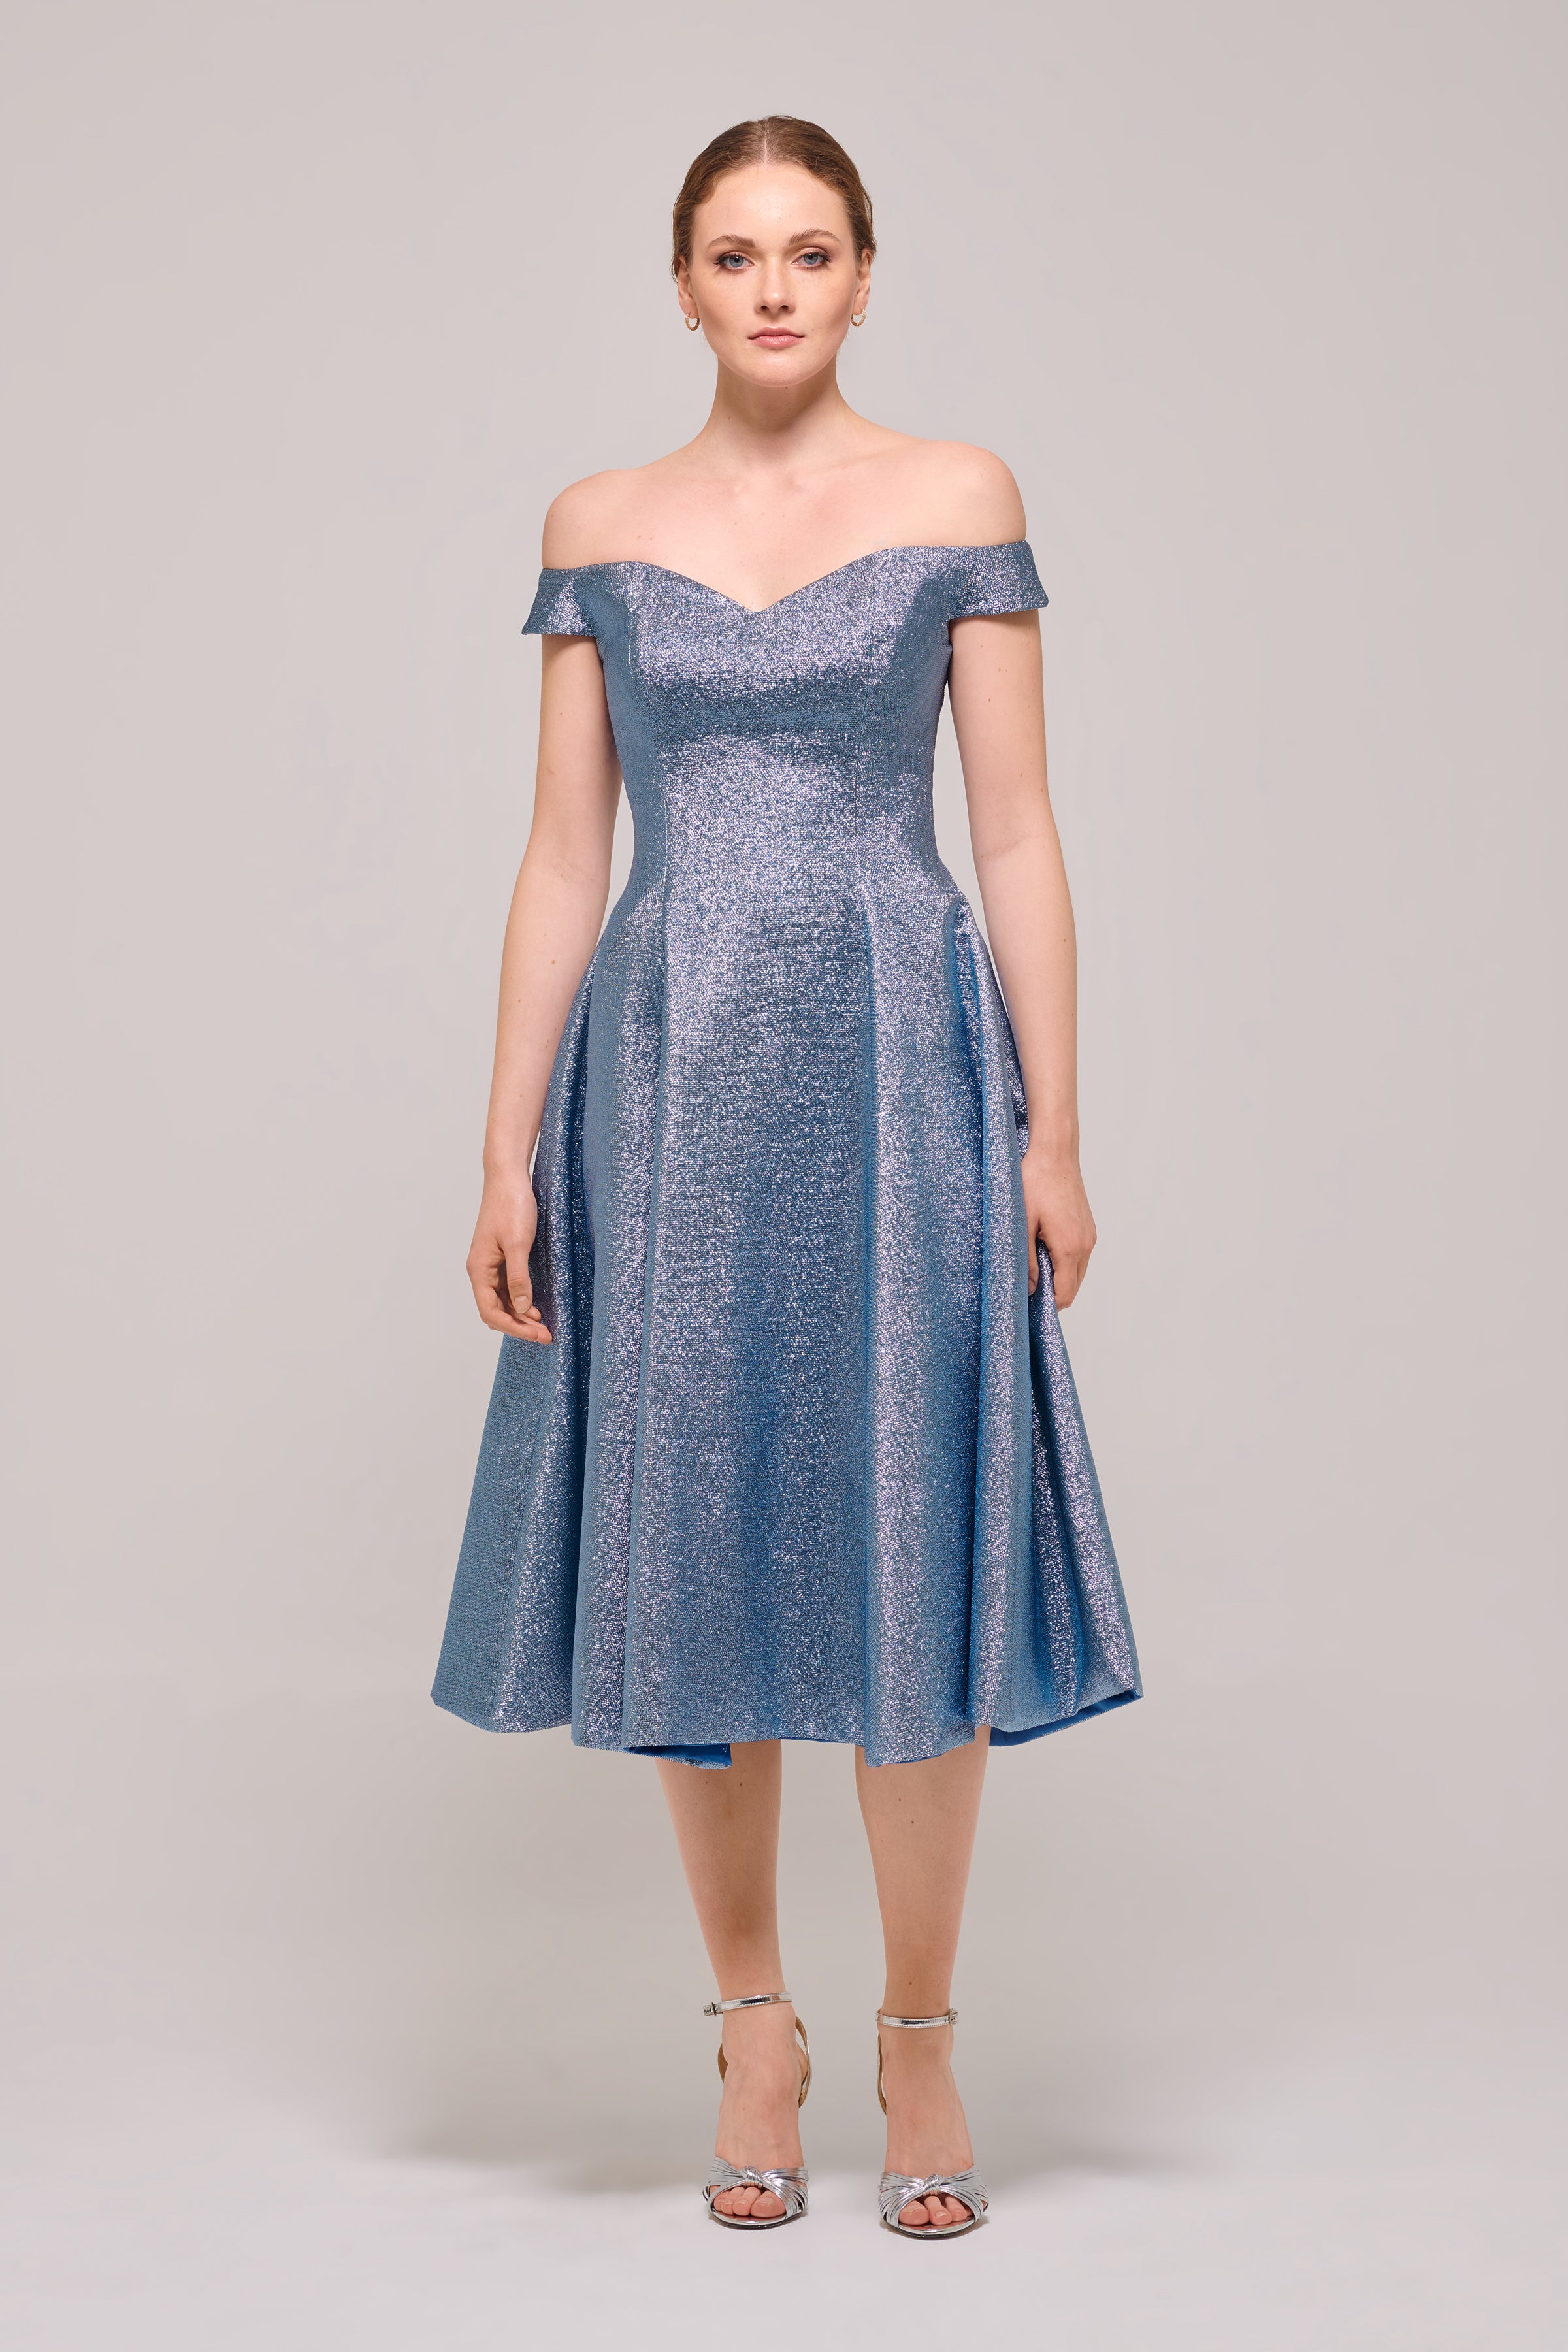 Midi Length Off The Shoulder Blue Jacquard Dress